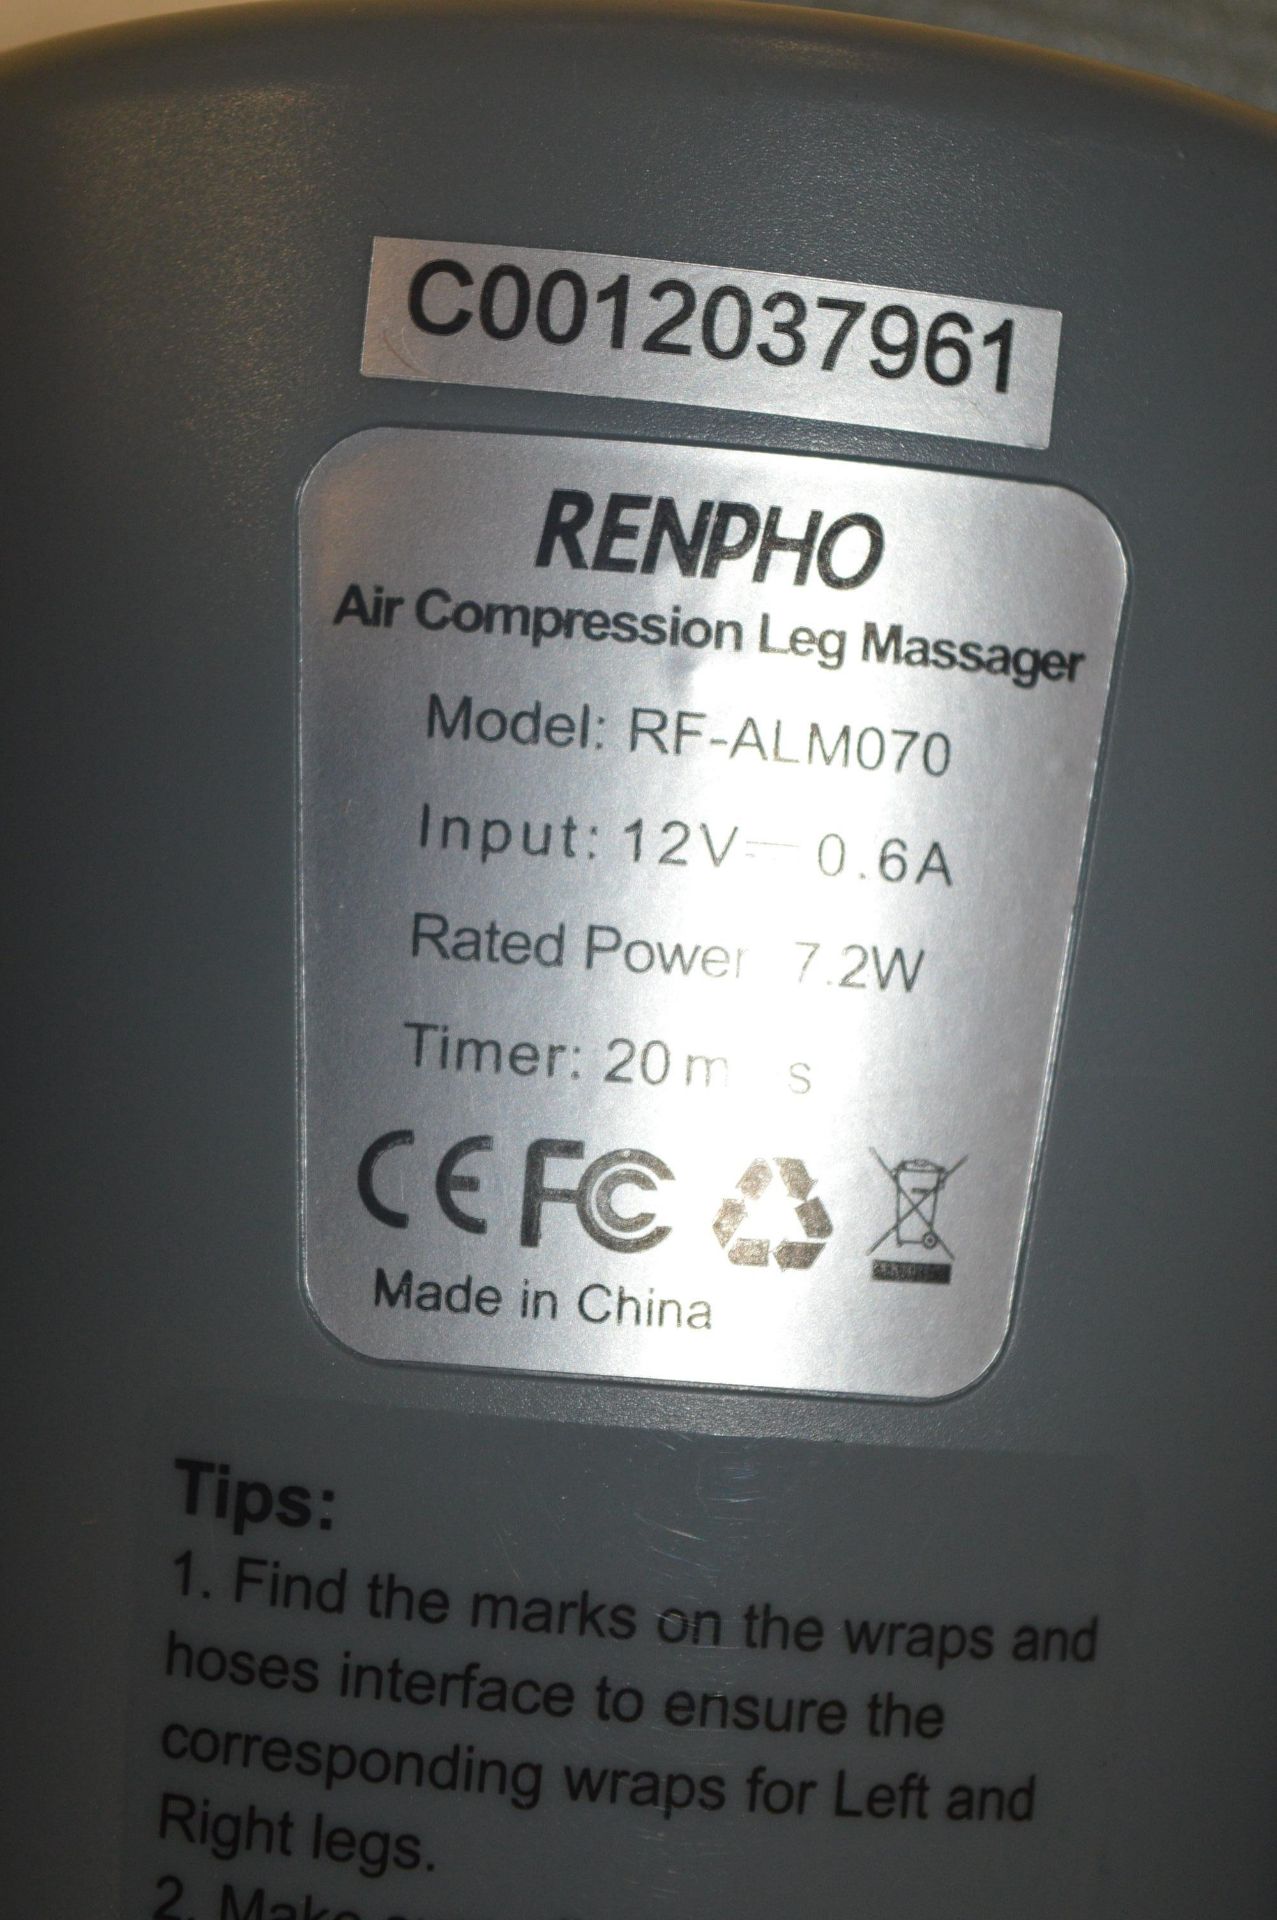 *Renpho Air Compression Leg Massager RF-ALM070 - Image 2 of 2